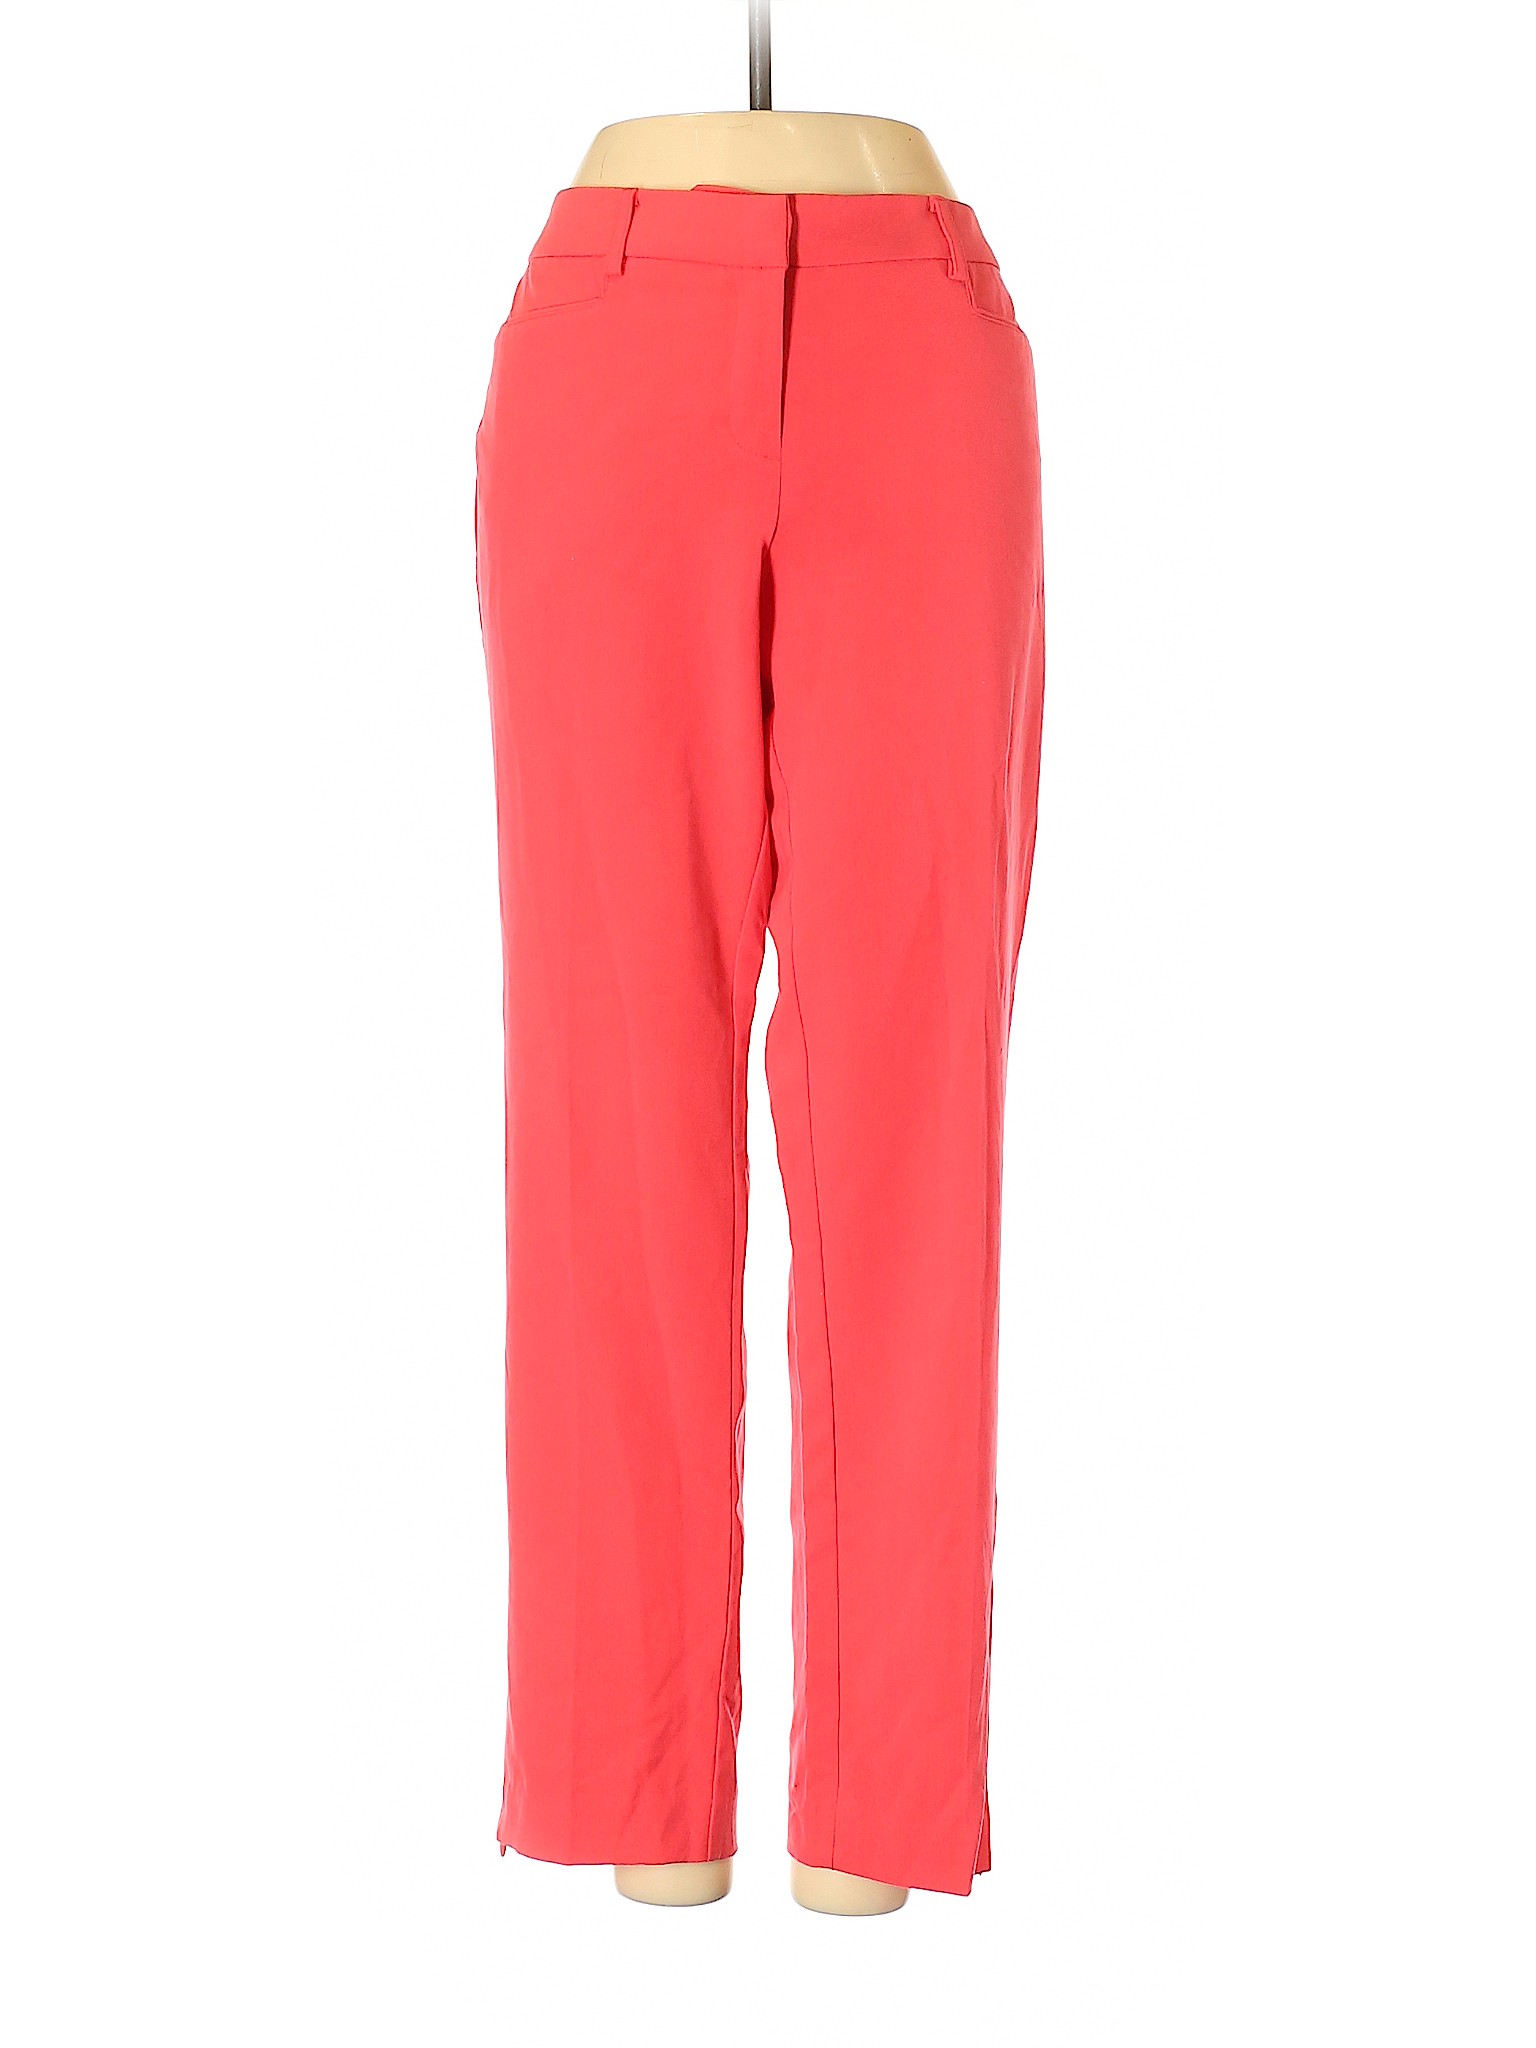 New York & Company Women Red Dress Pants 4 | eBay